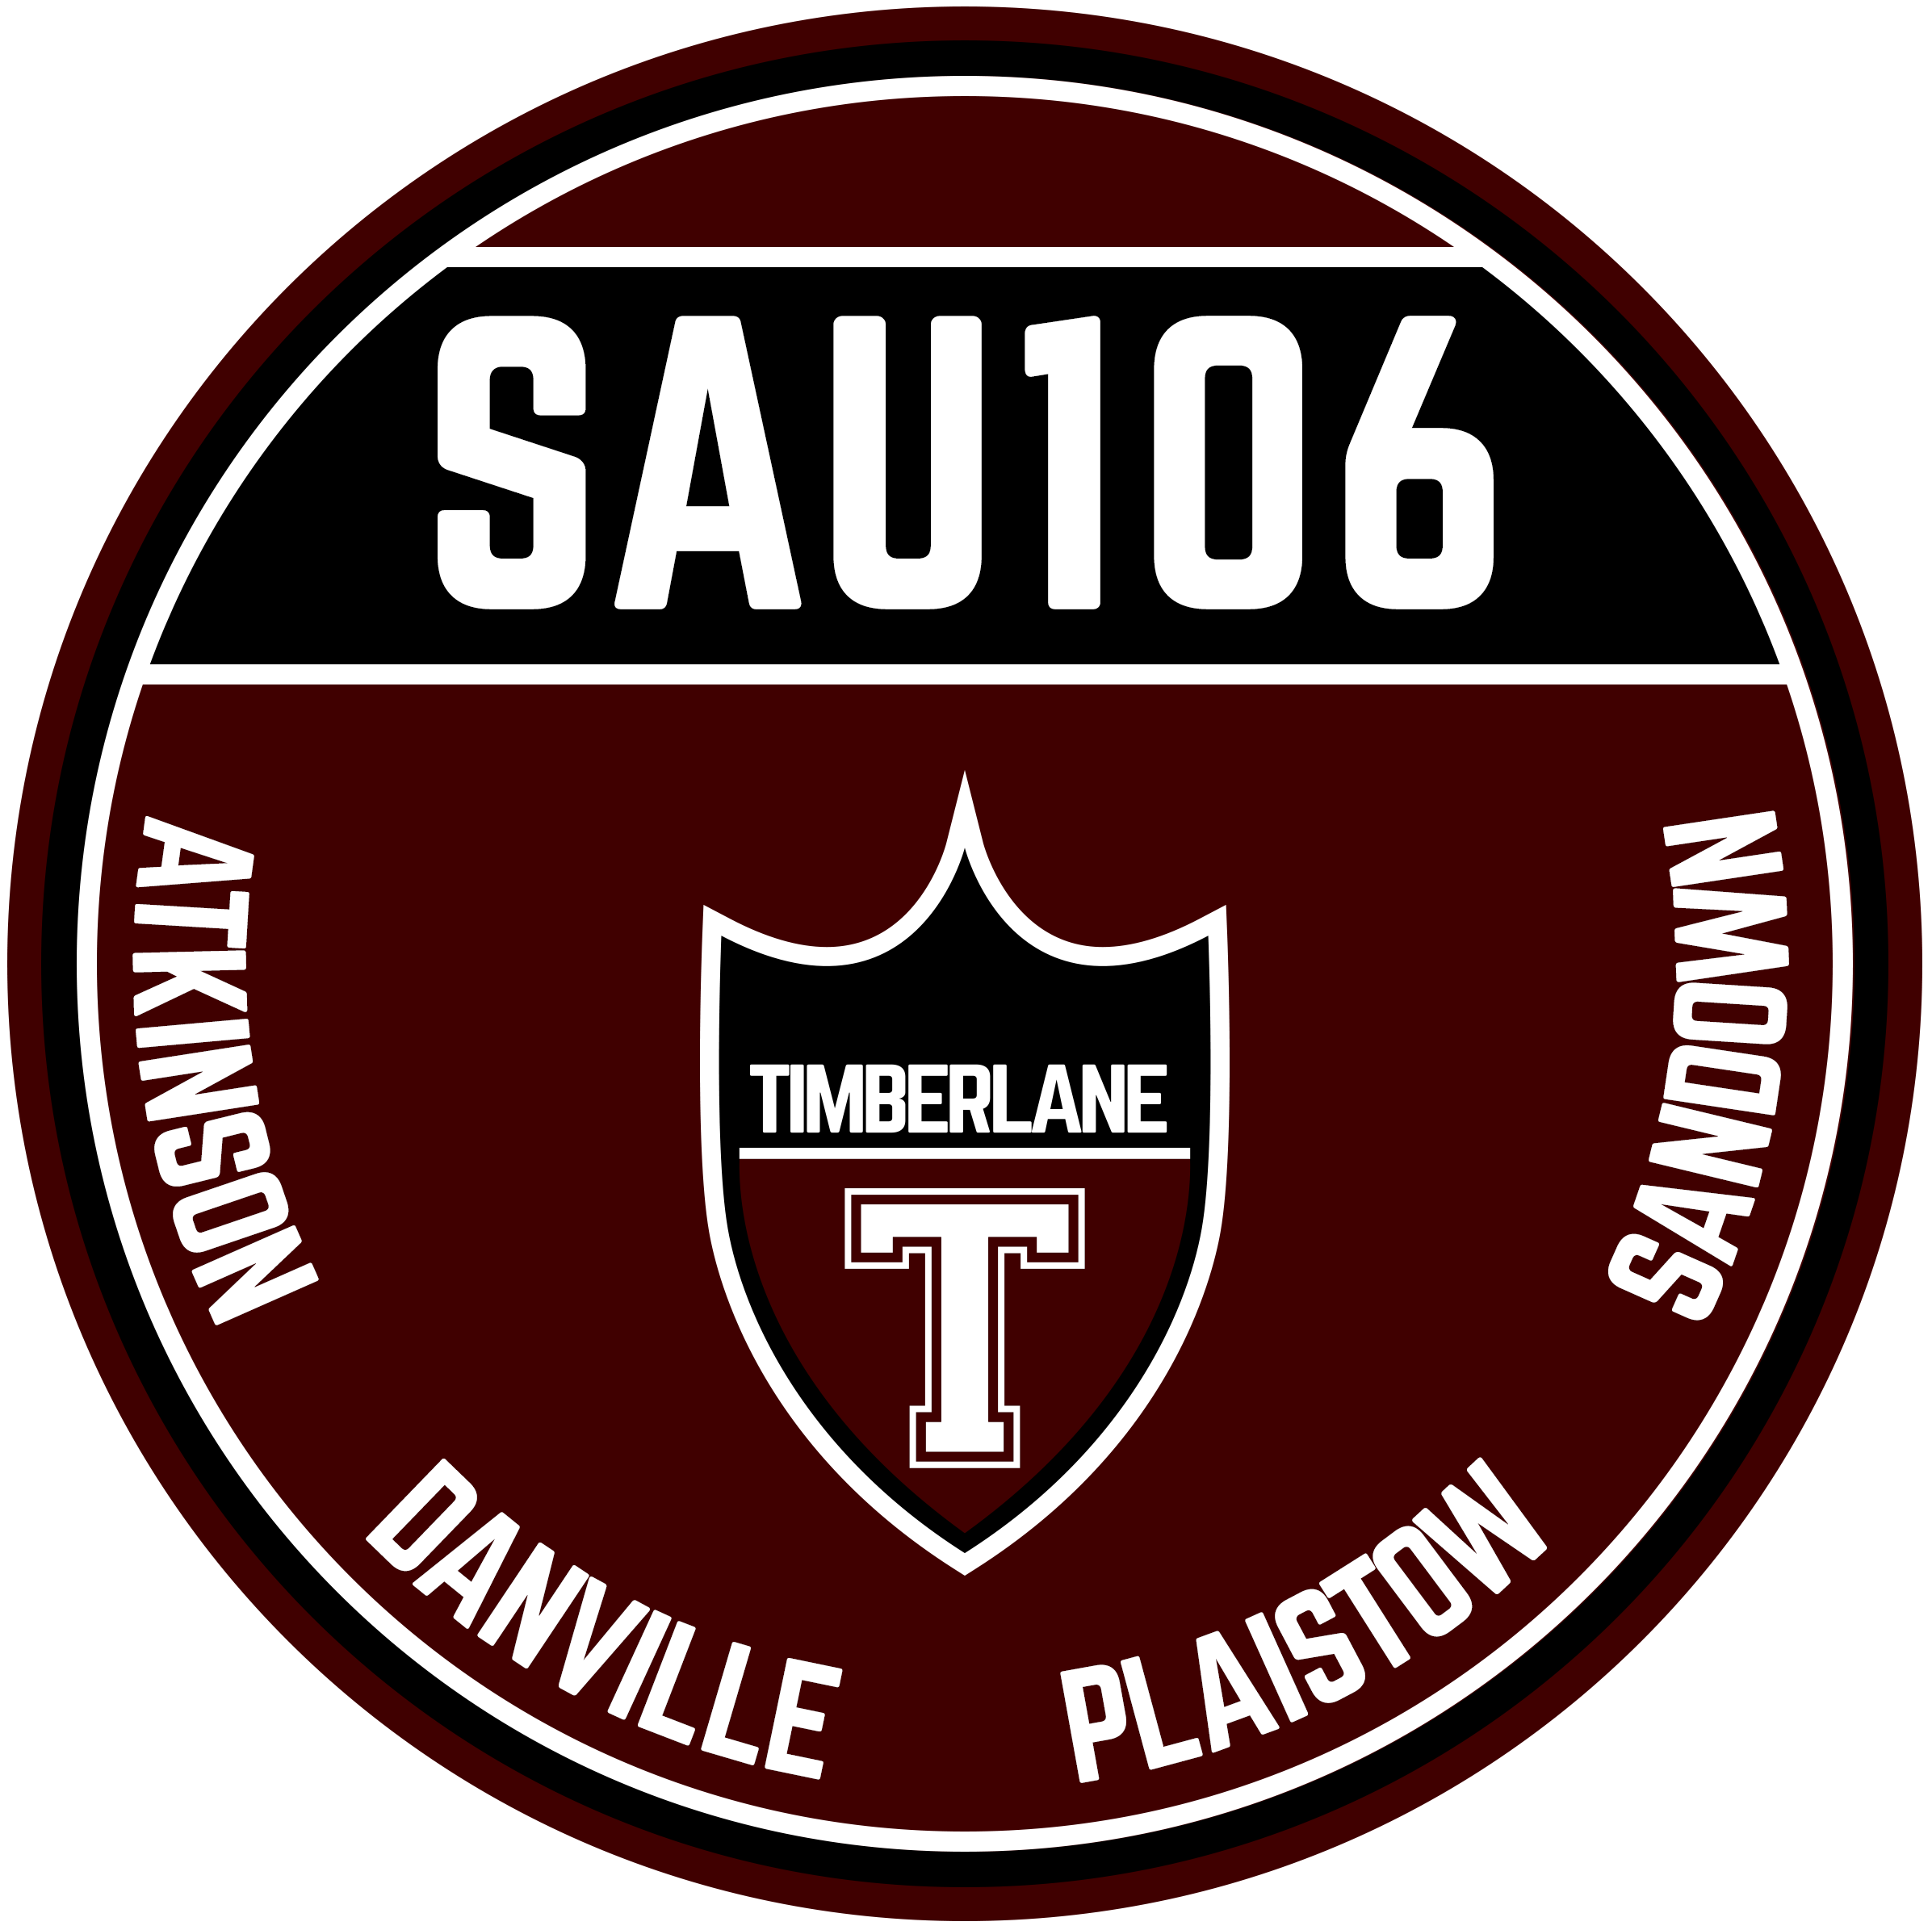 SAU106 Logo Updated.png